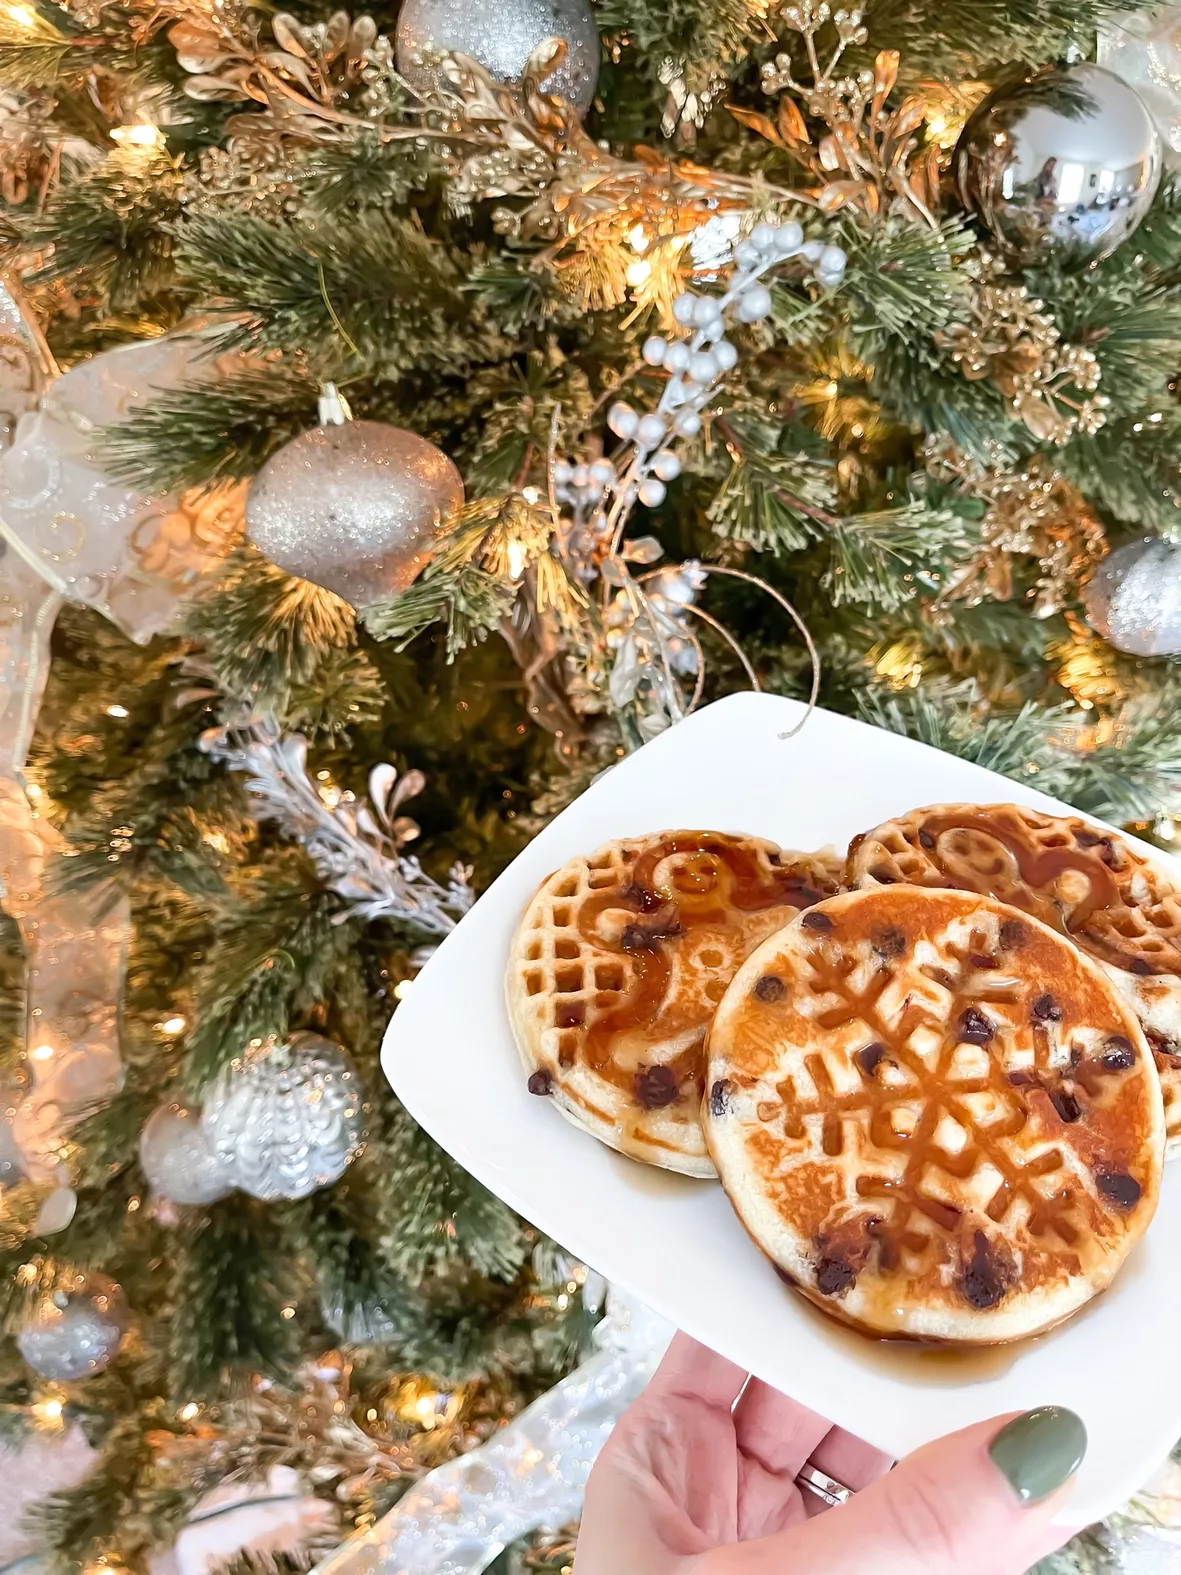 Dash Christmas Tree Mini Waffle Maker